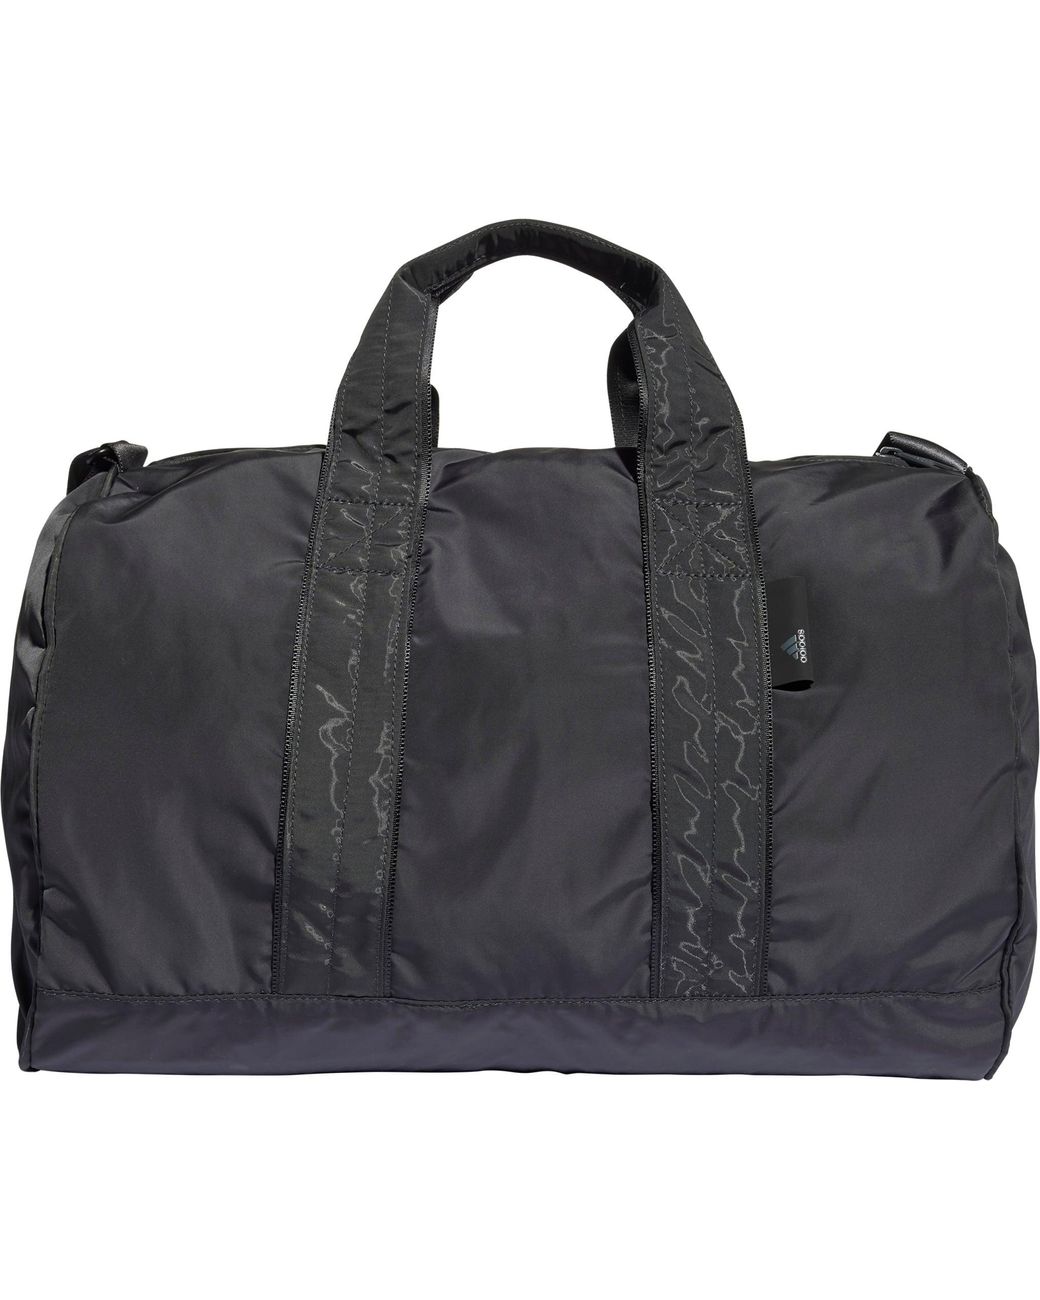 adidas Originals Studio Lounge Duffel Bag in Black | Lyst Canada